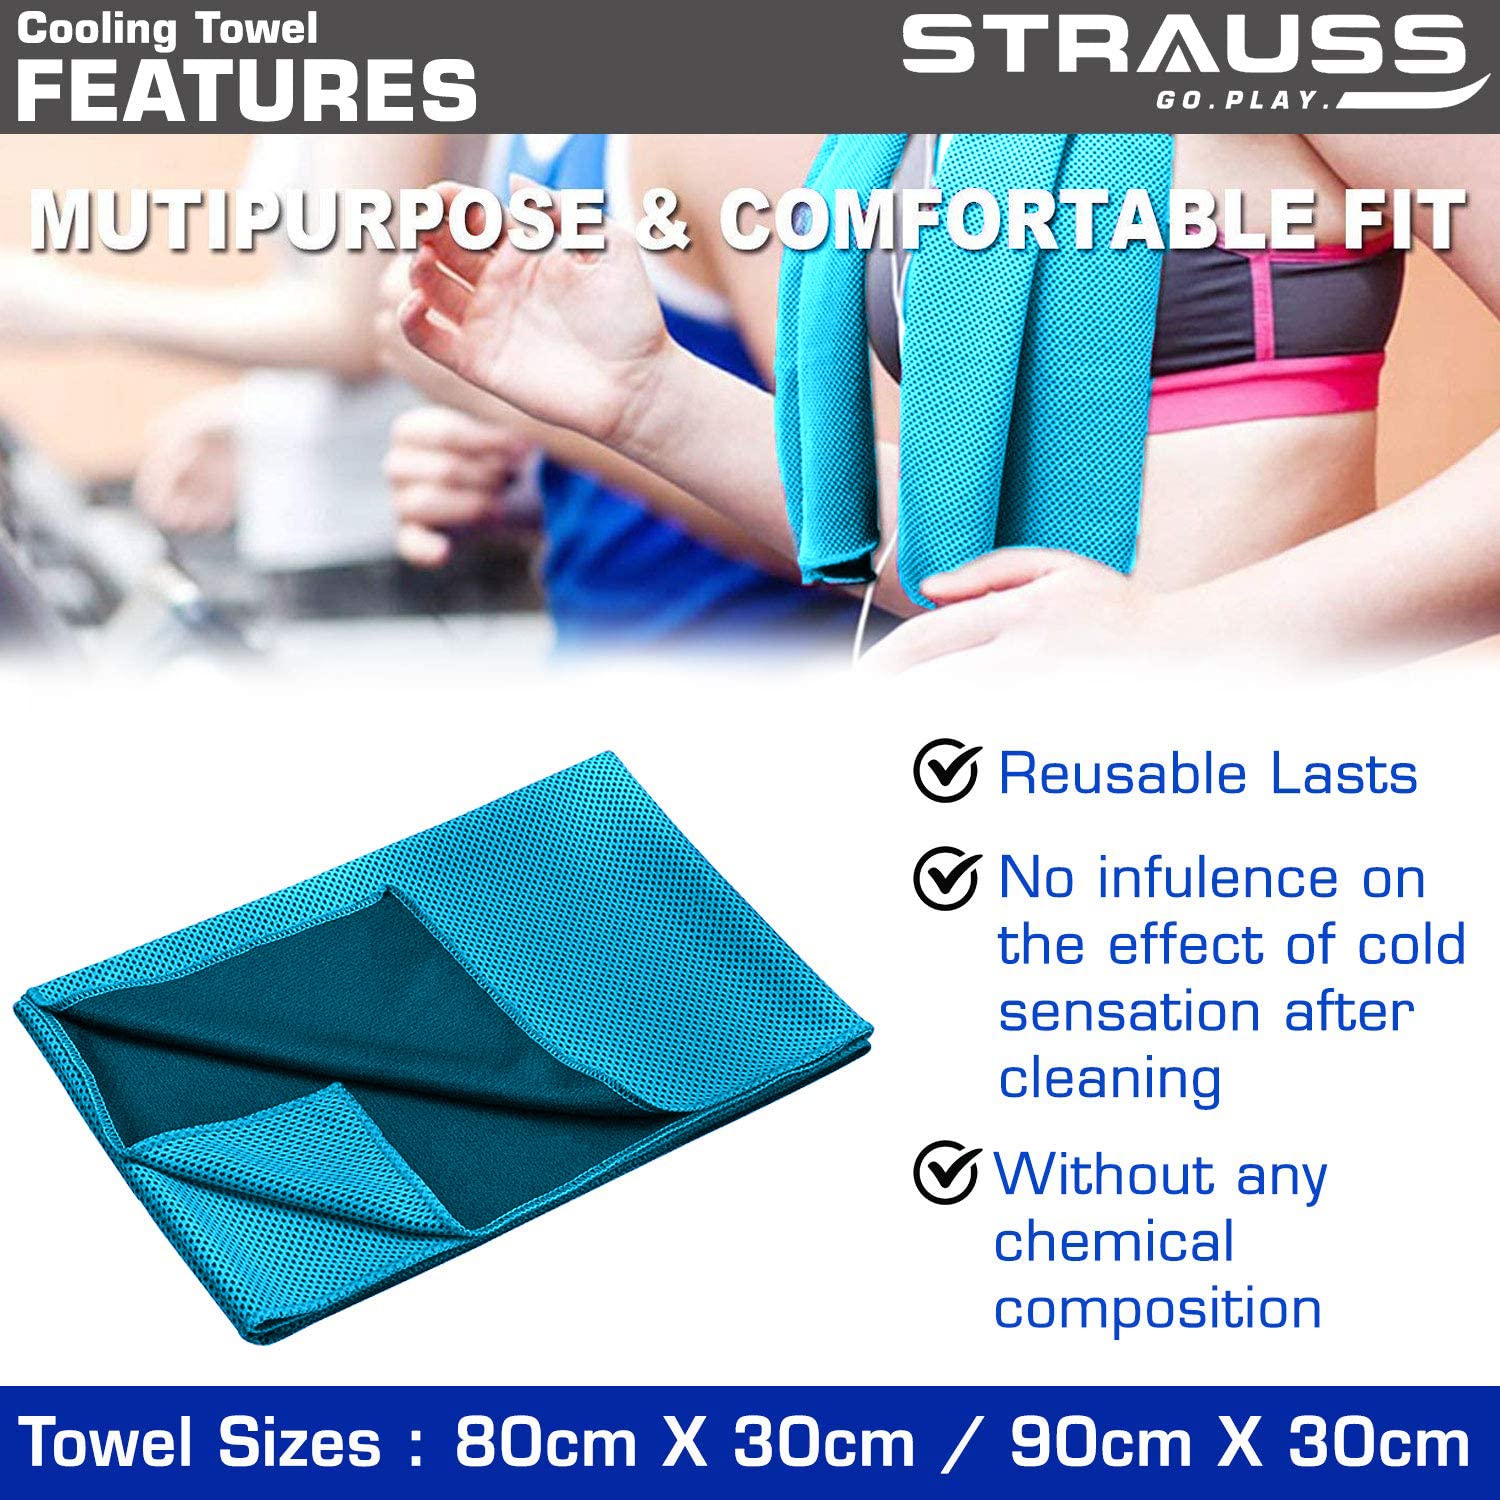 STRAUSS Cooling Towel, 80 cm, (Sky Blue)